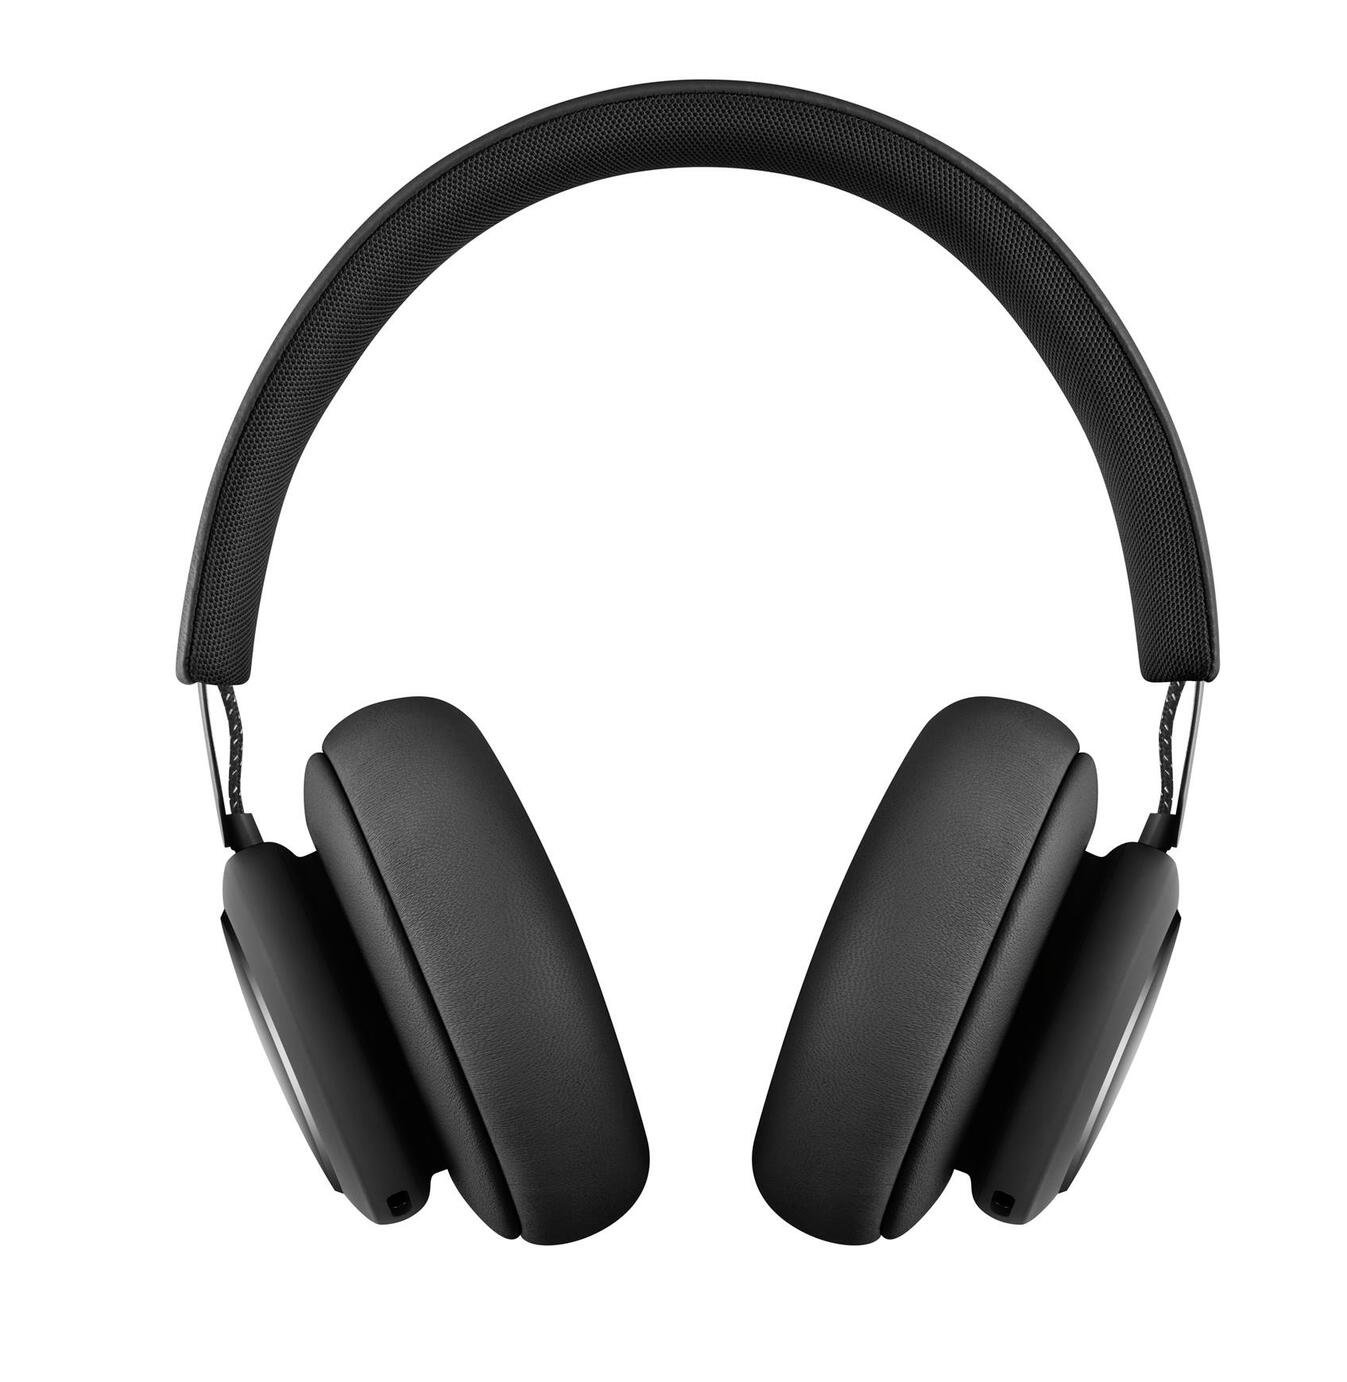 Bang & Olufsen Beoplay H4 2nd Gen Wireless Headphones Black Review